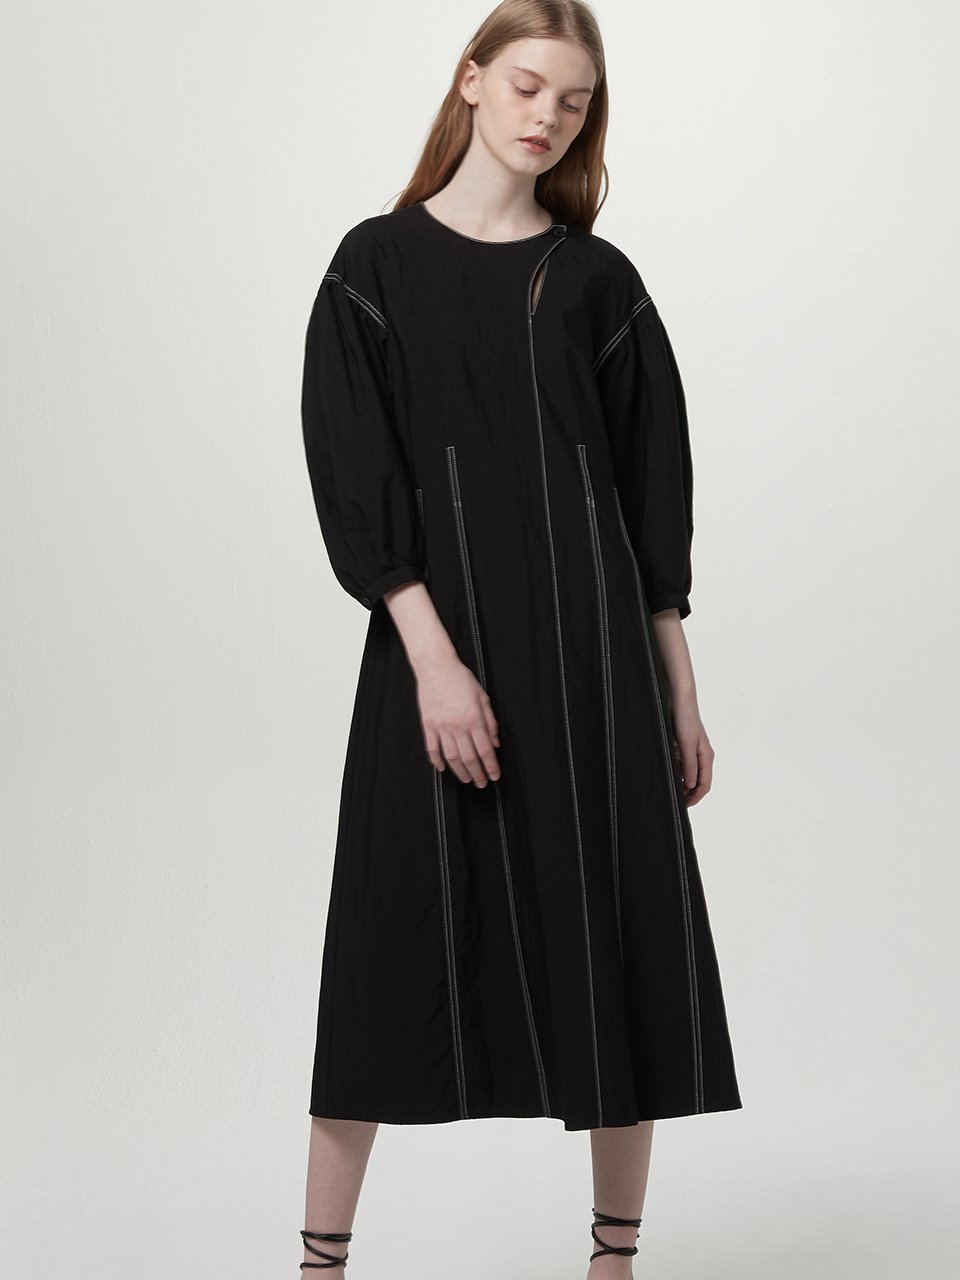 Pointed stitch dress - Black